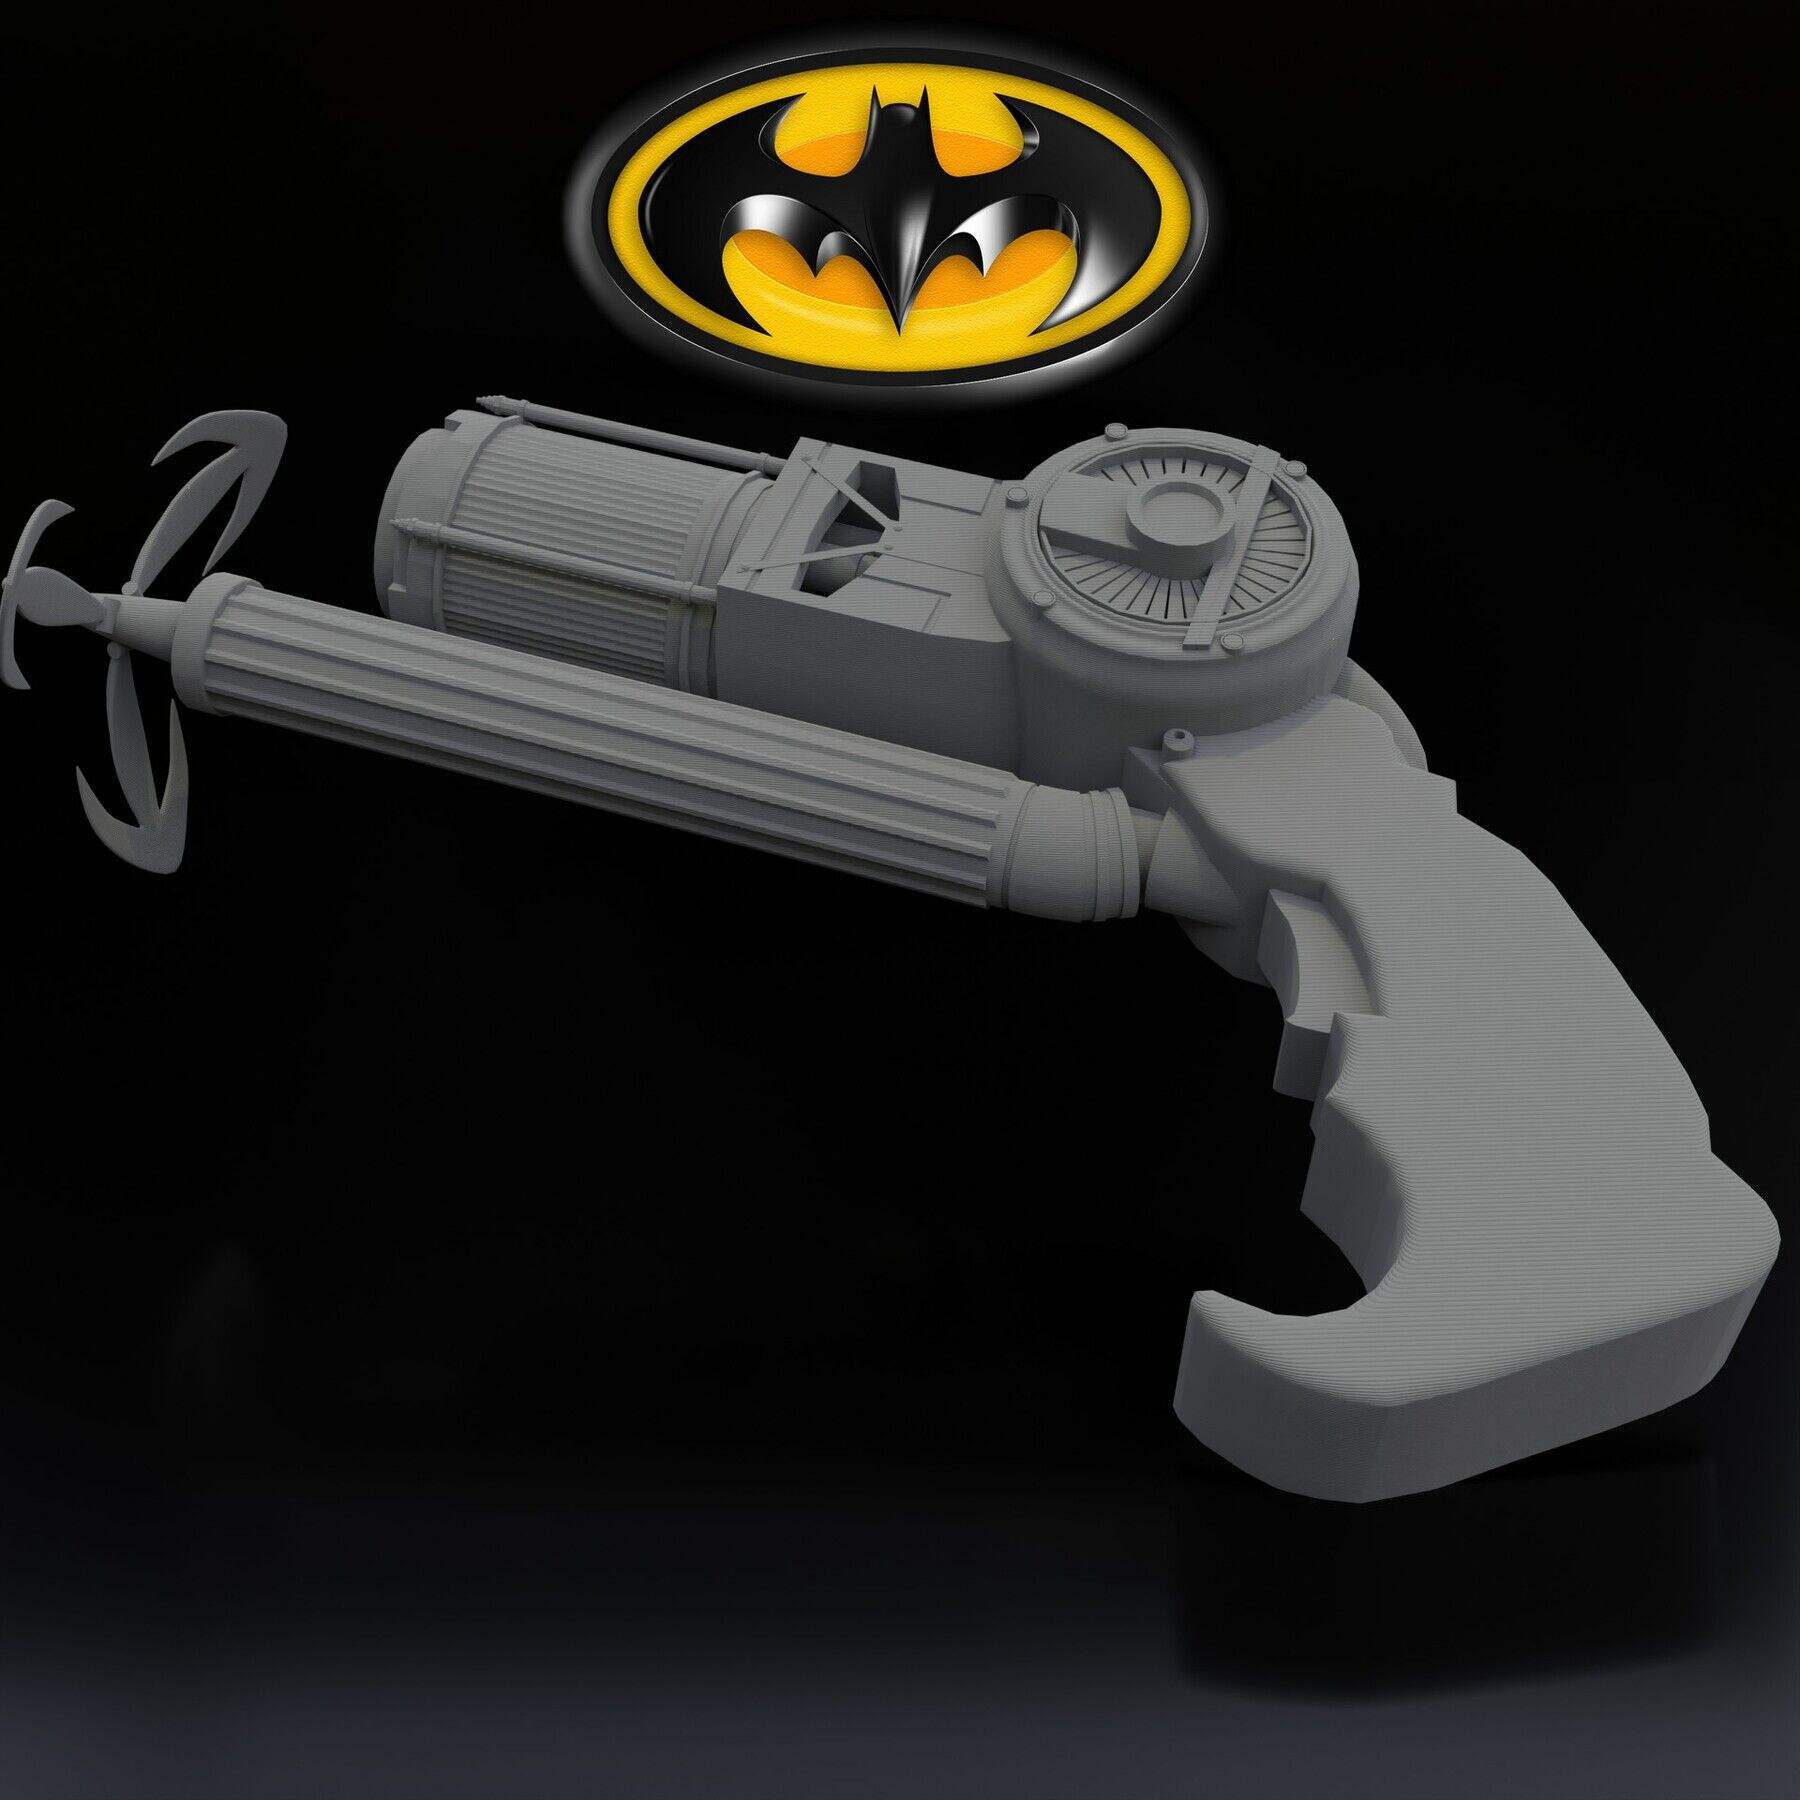 BATMAN - Animated series grappling hook, 3D models download